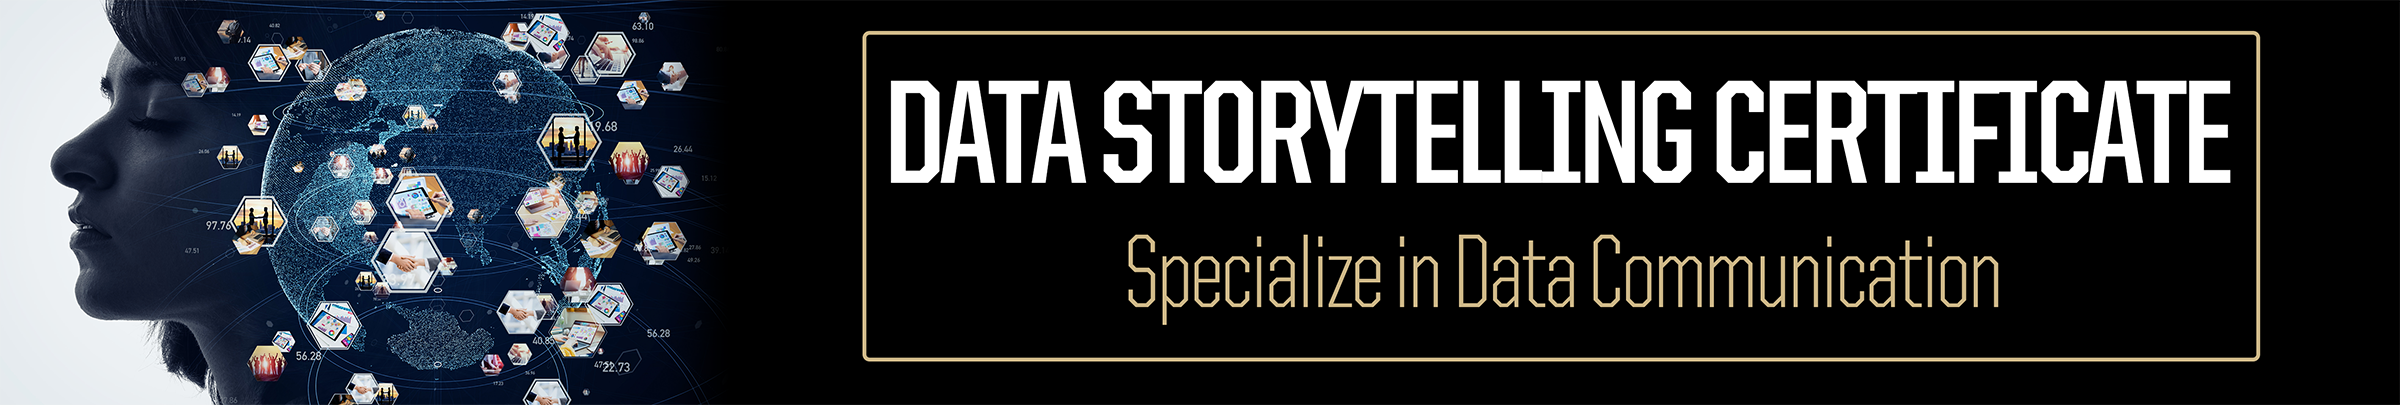 Purdue University Data Storytelling Online Certificate. Specialize in Data Communication.